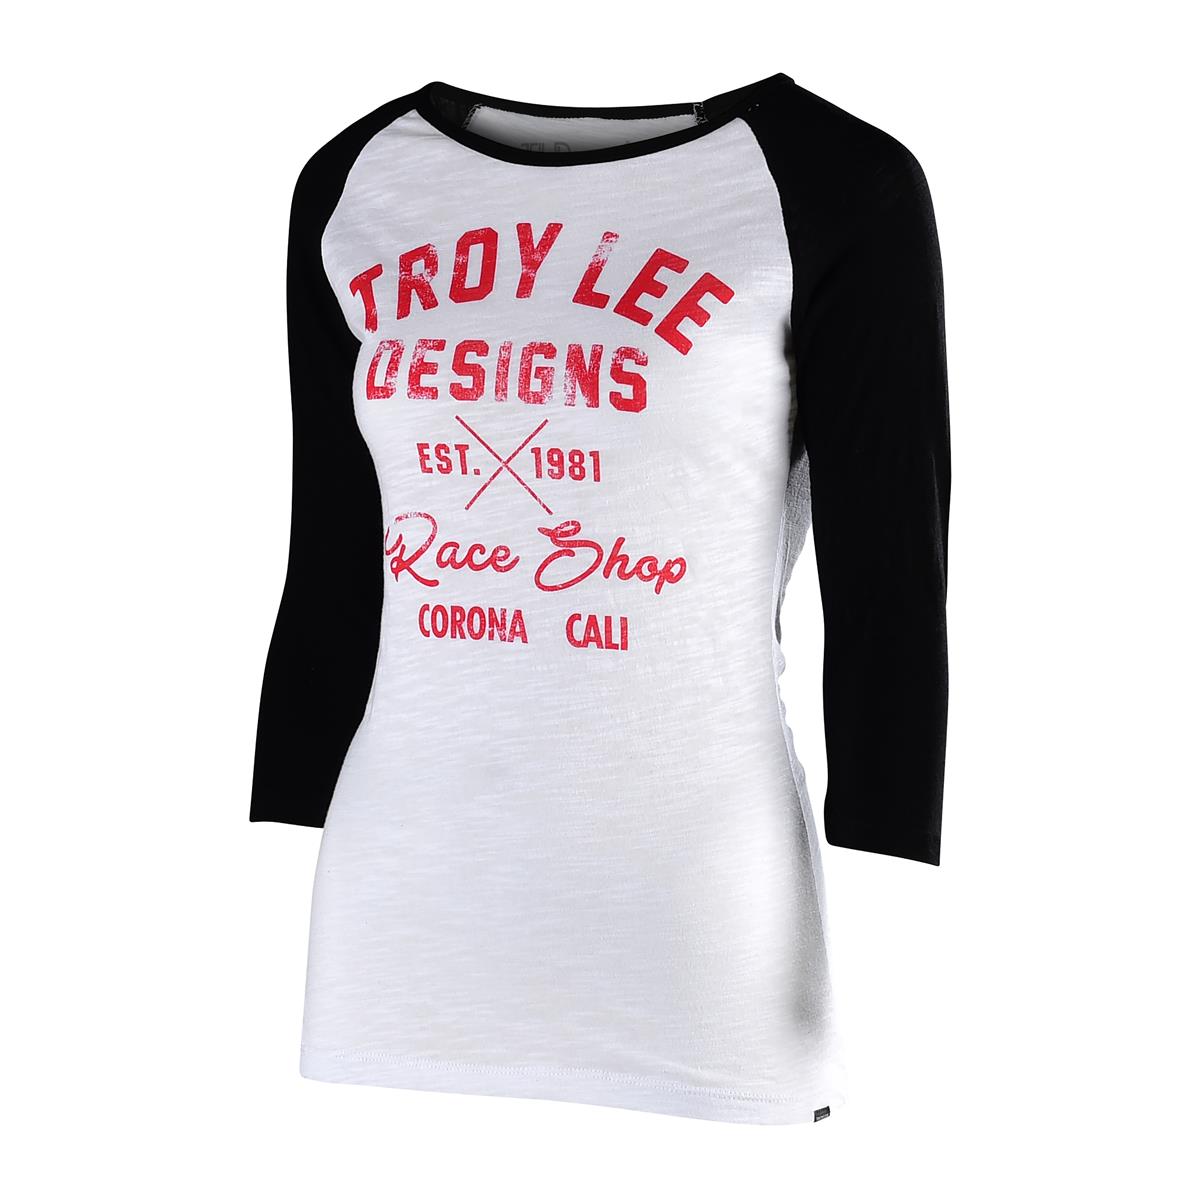 Troy Lee Designs Femme T-Shirt Manches 3/4 Vintage Speed Shop Black/White